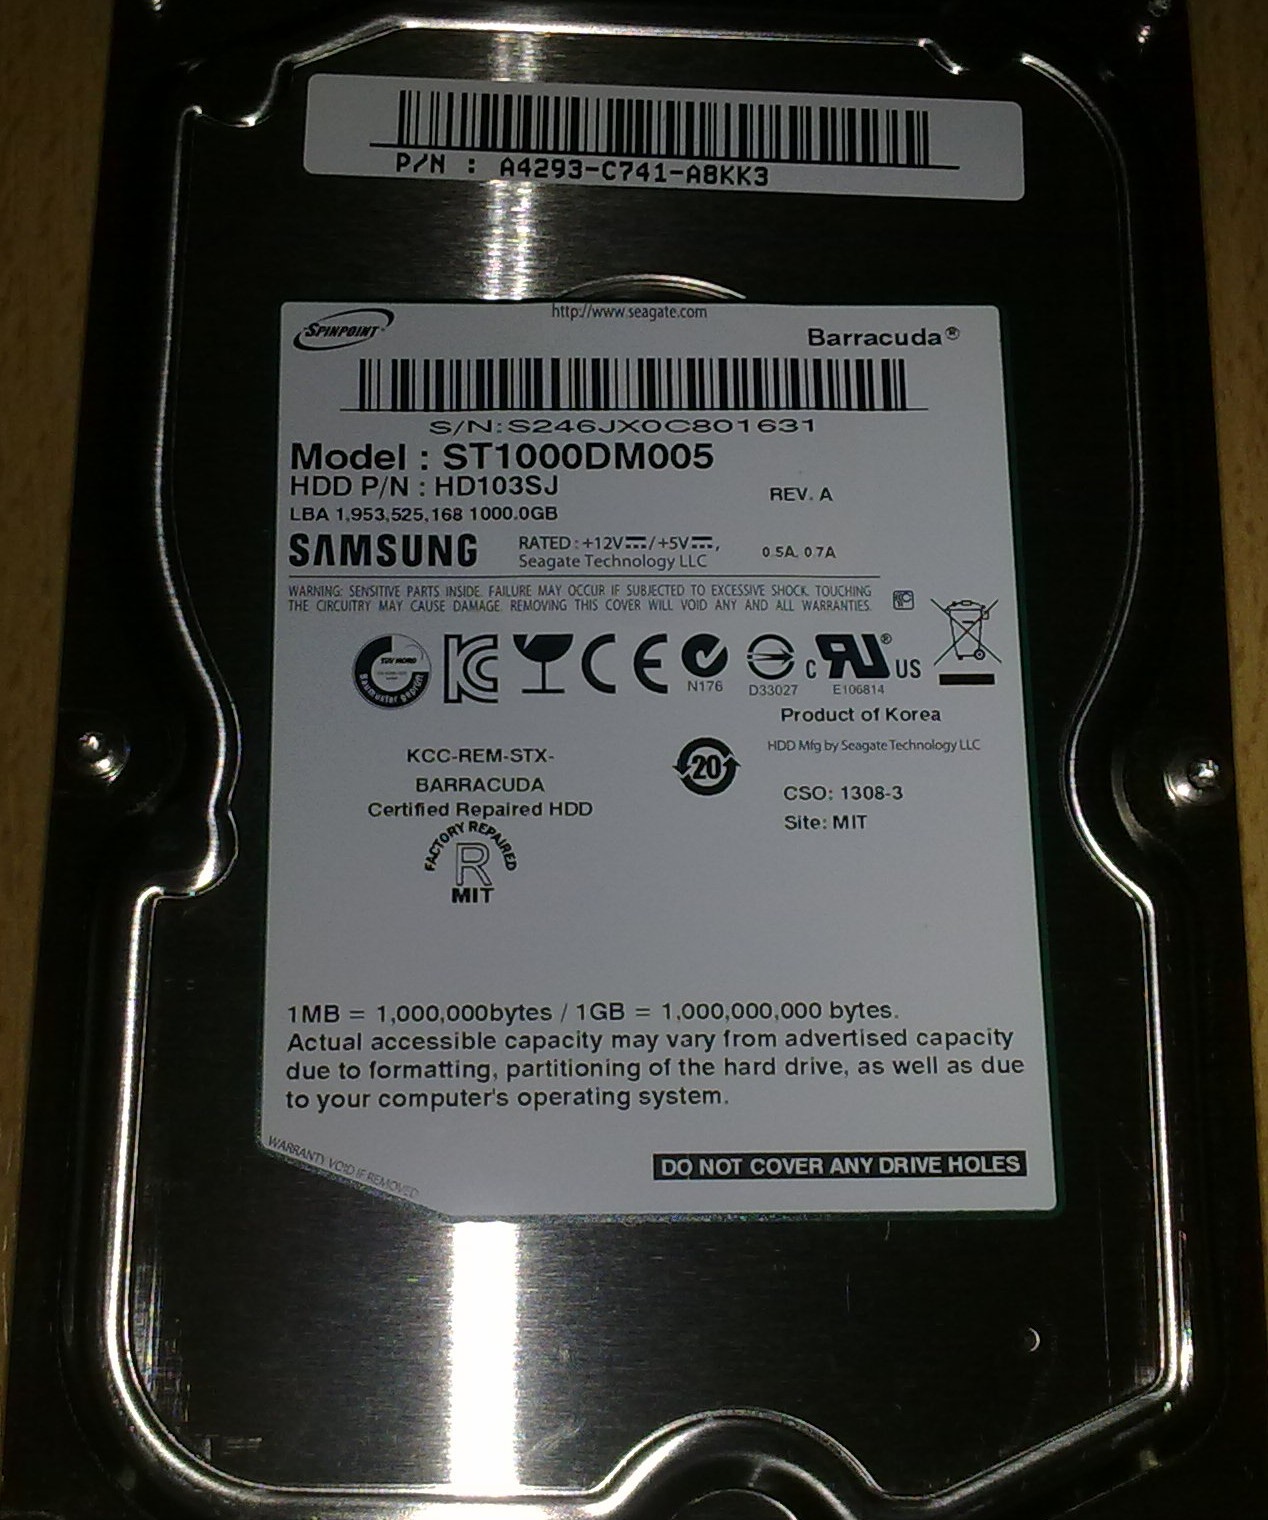  Samsung 103SJ (ST1000DM005) İnceleme